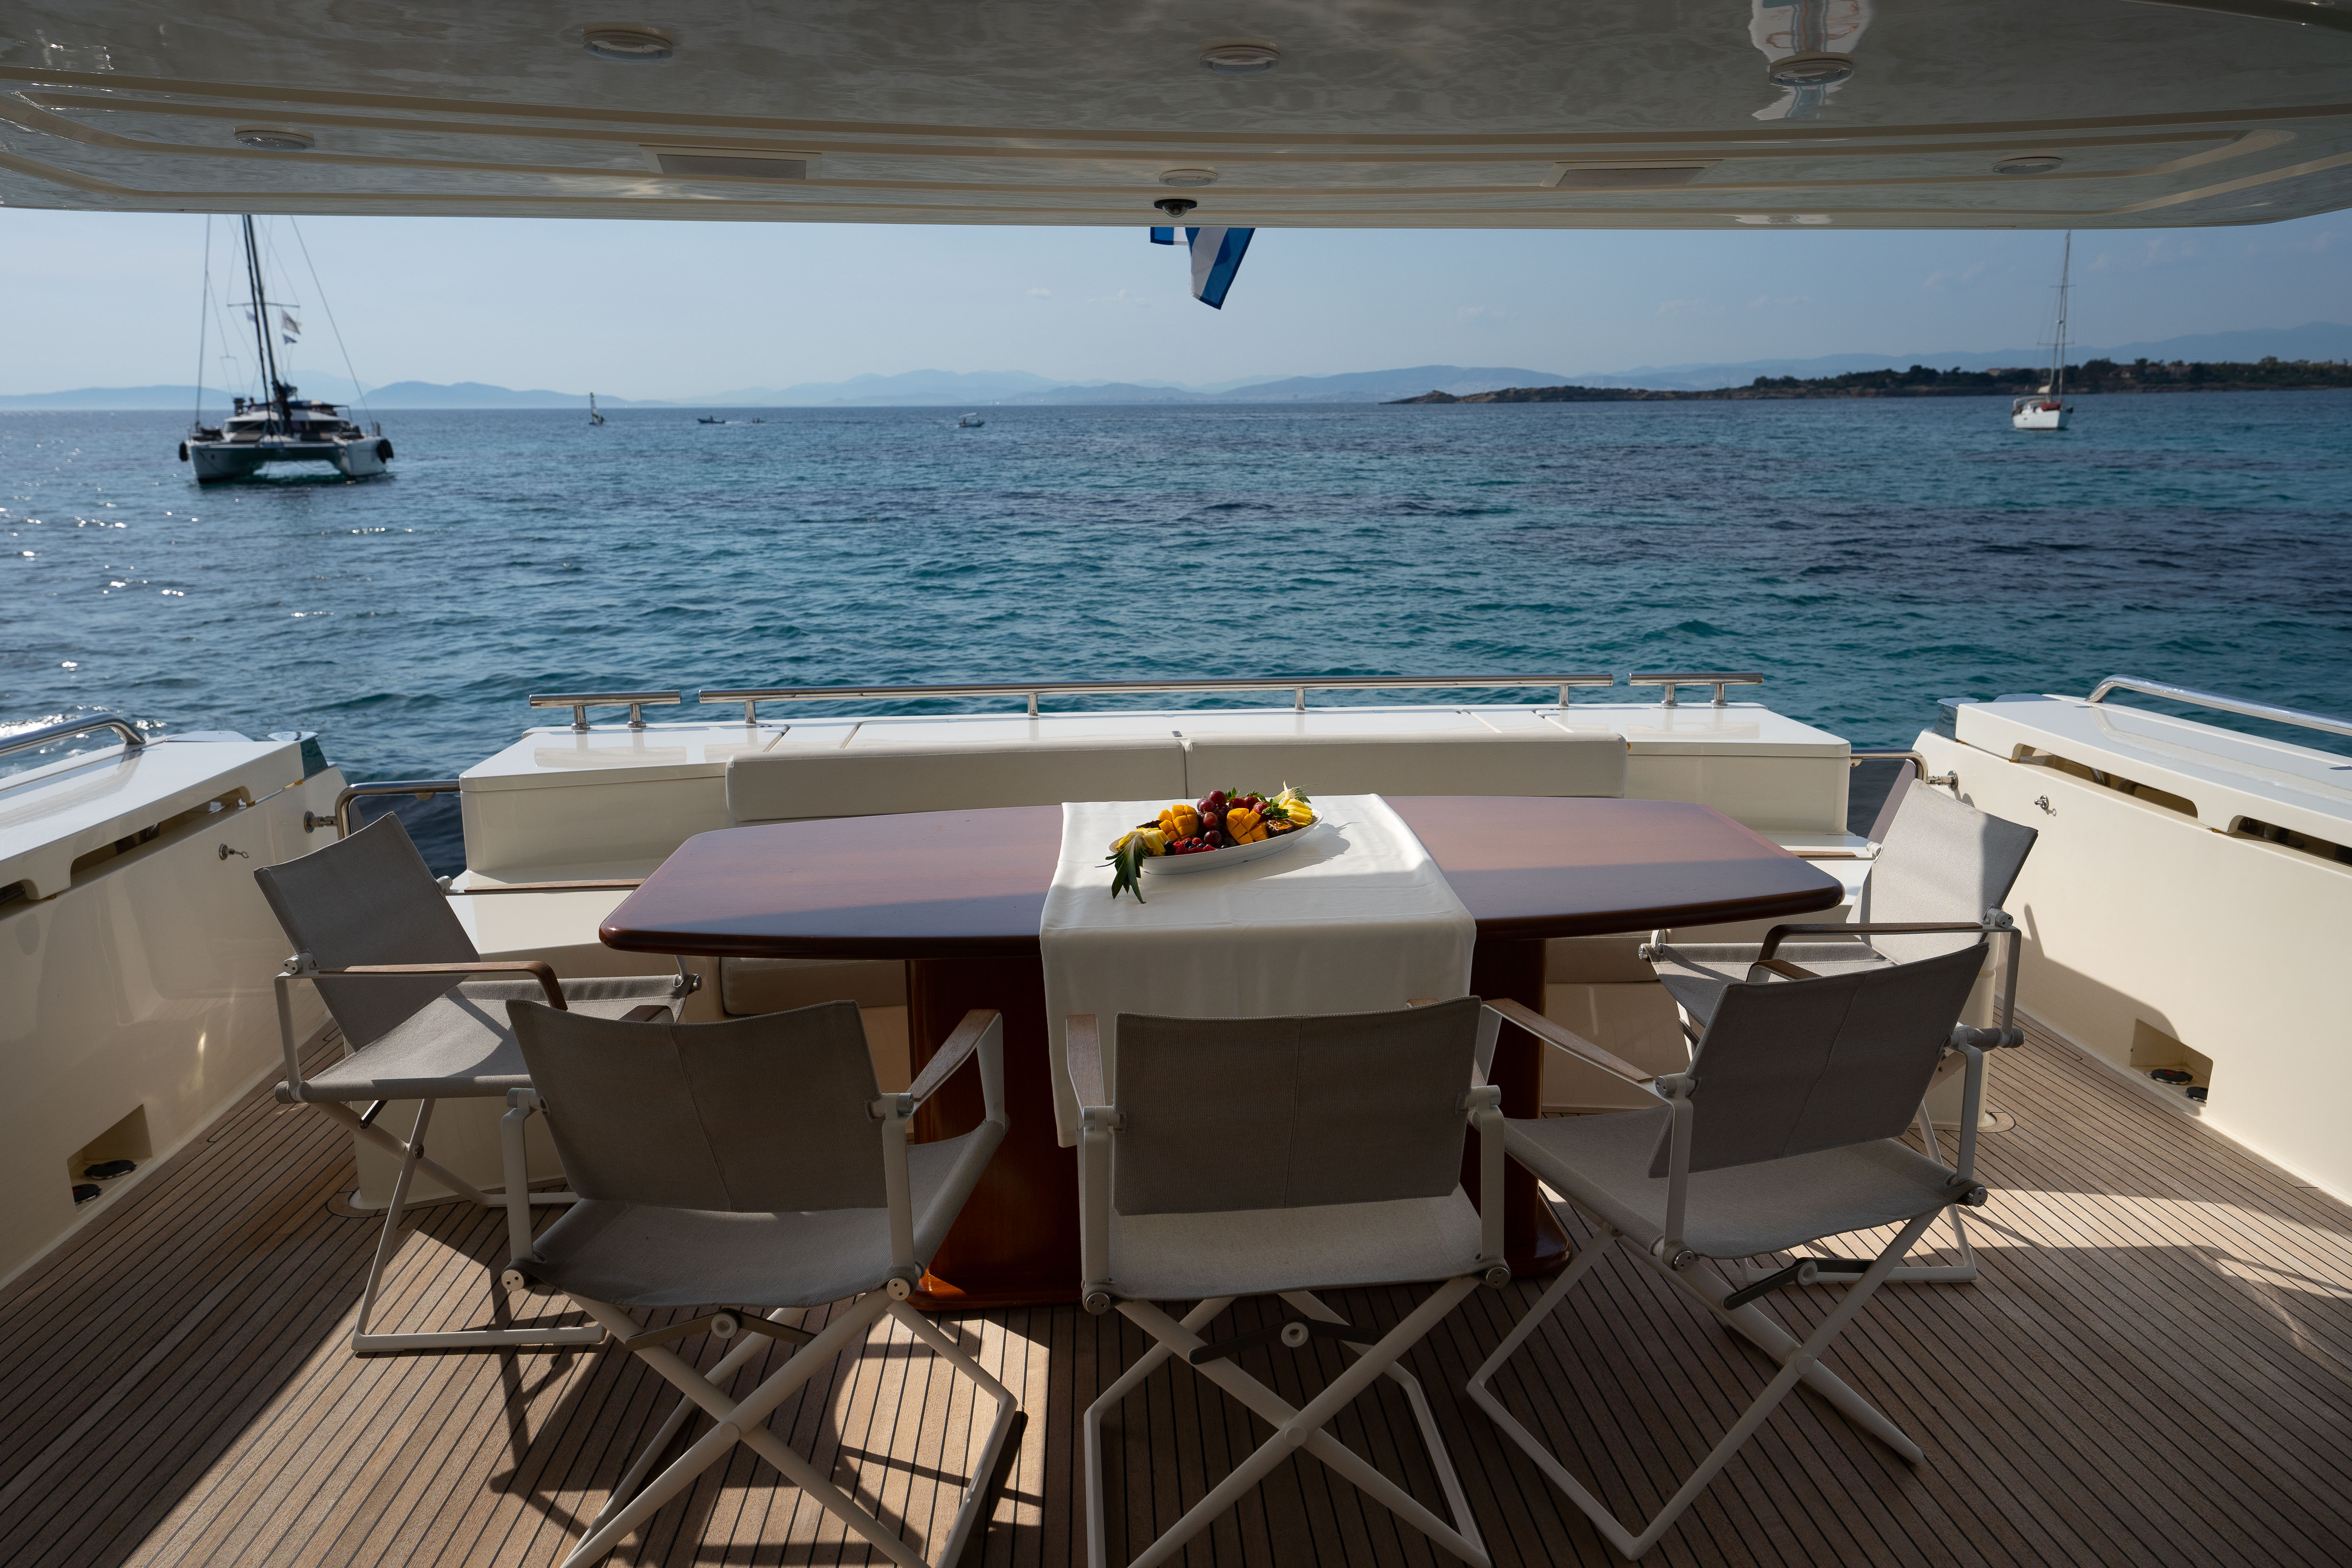 Ferretti 780 - Location de Superyacht dans le Monde Entier & Boat hire in Greece Athens and Saronic Gulf Athens Hellinikon Agios Kosmas Marina 5